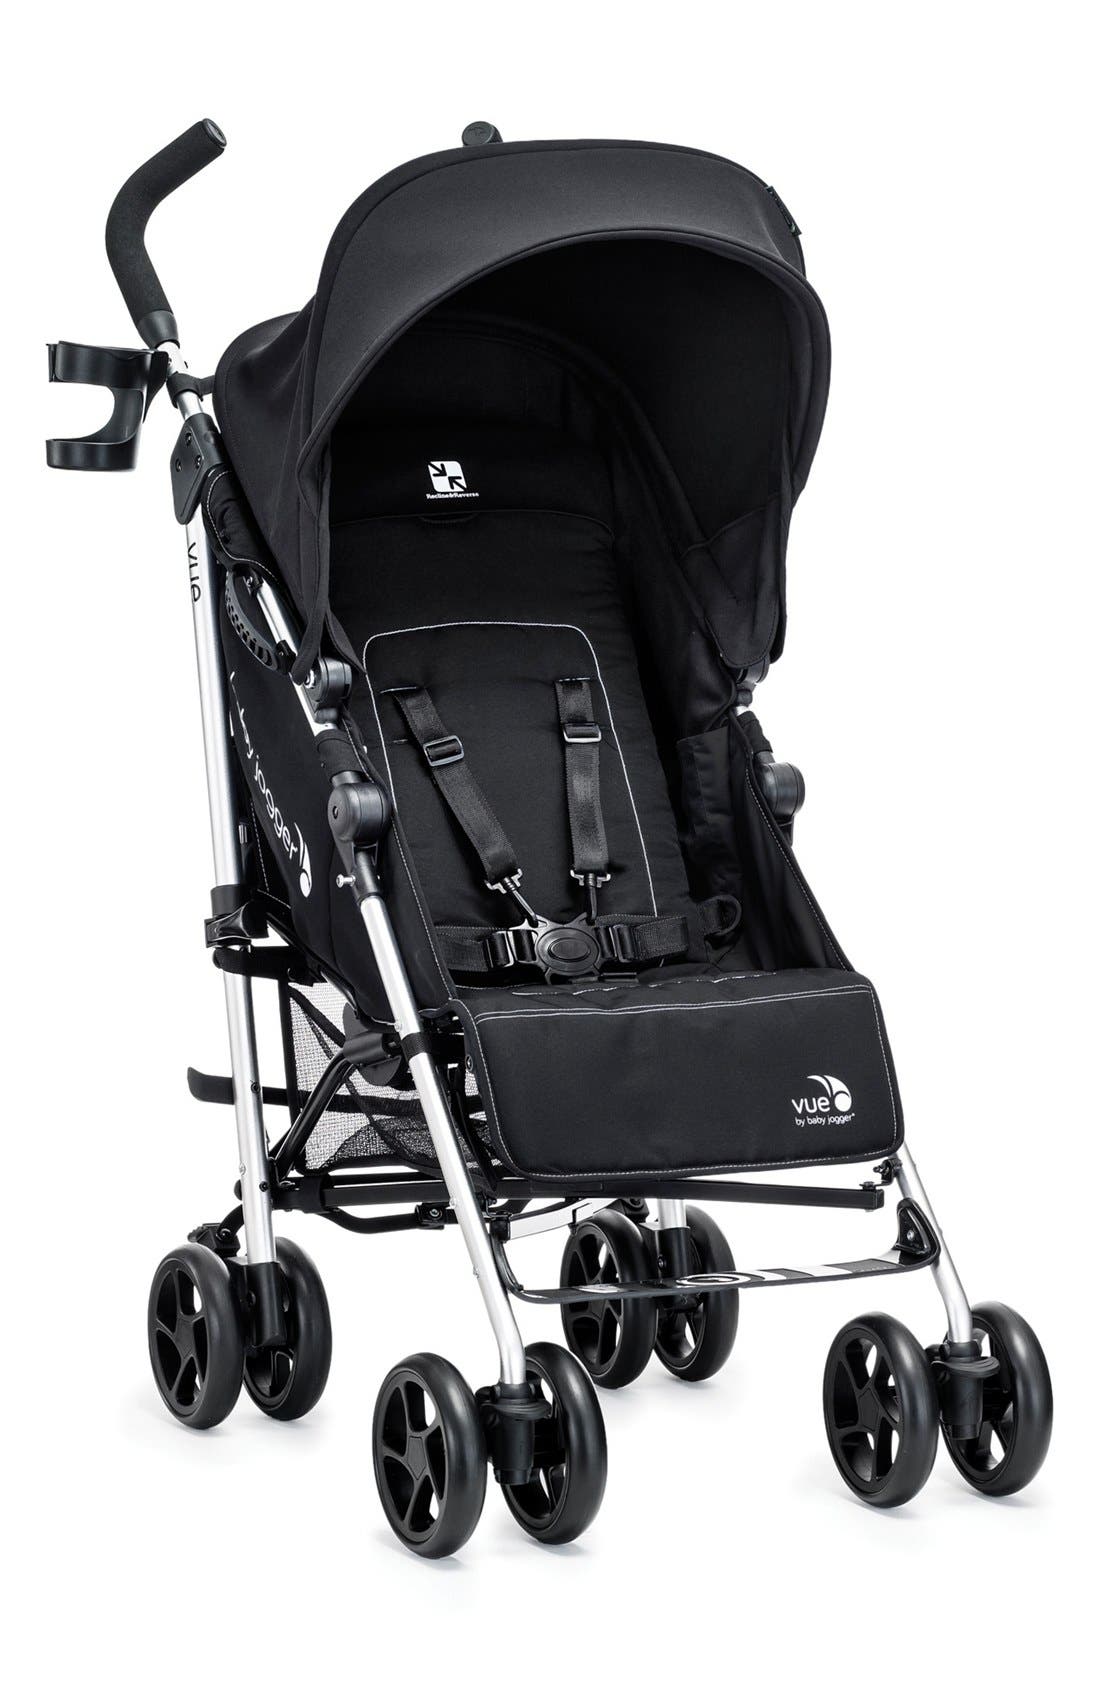 baby jogger reversible stroller